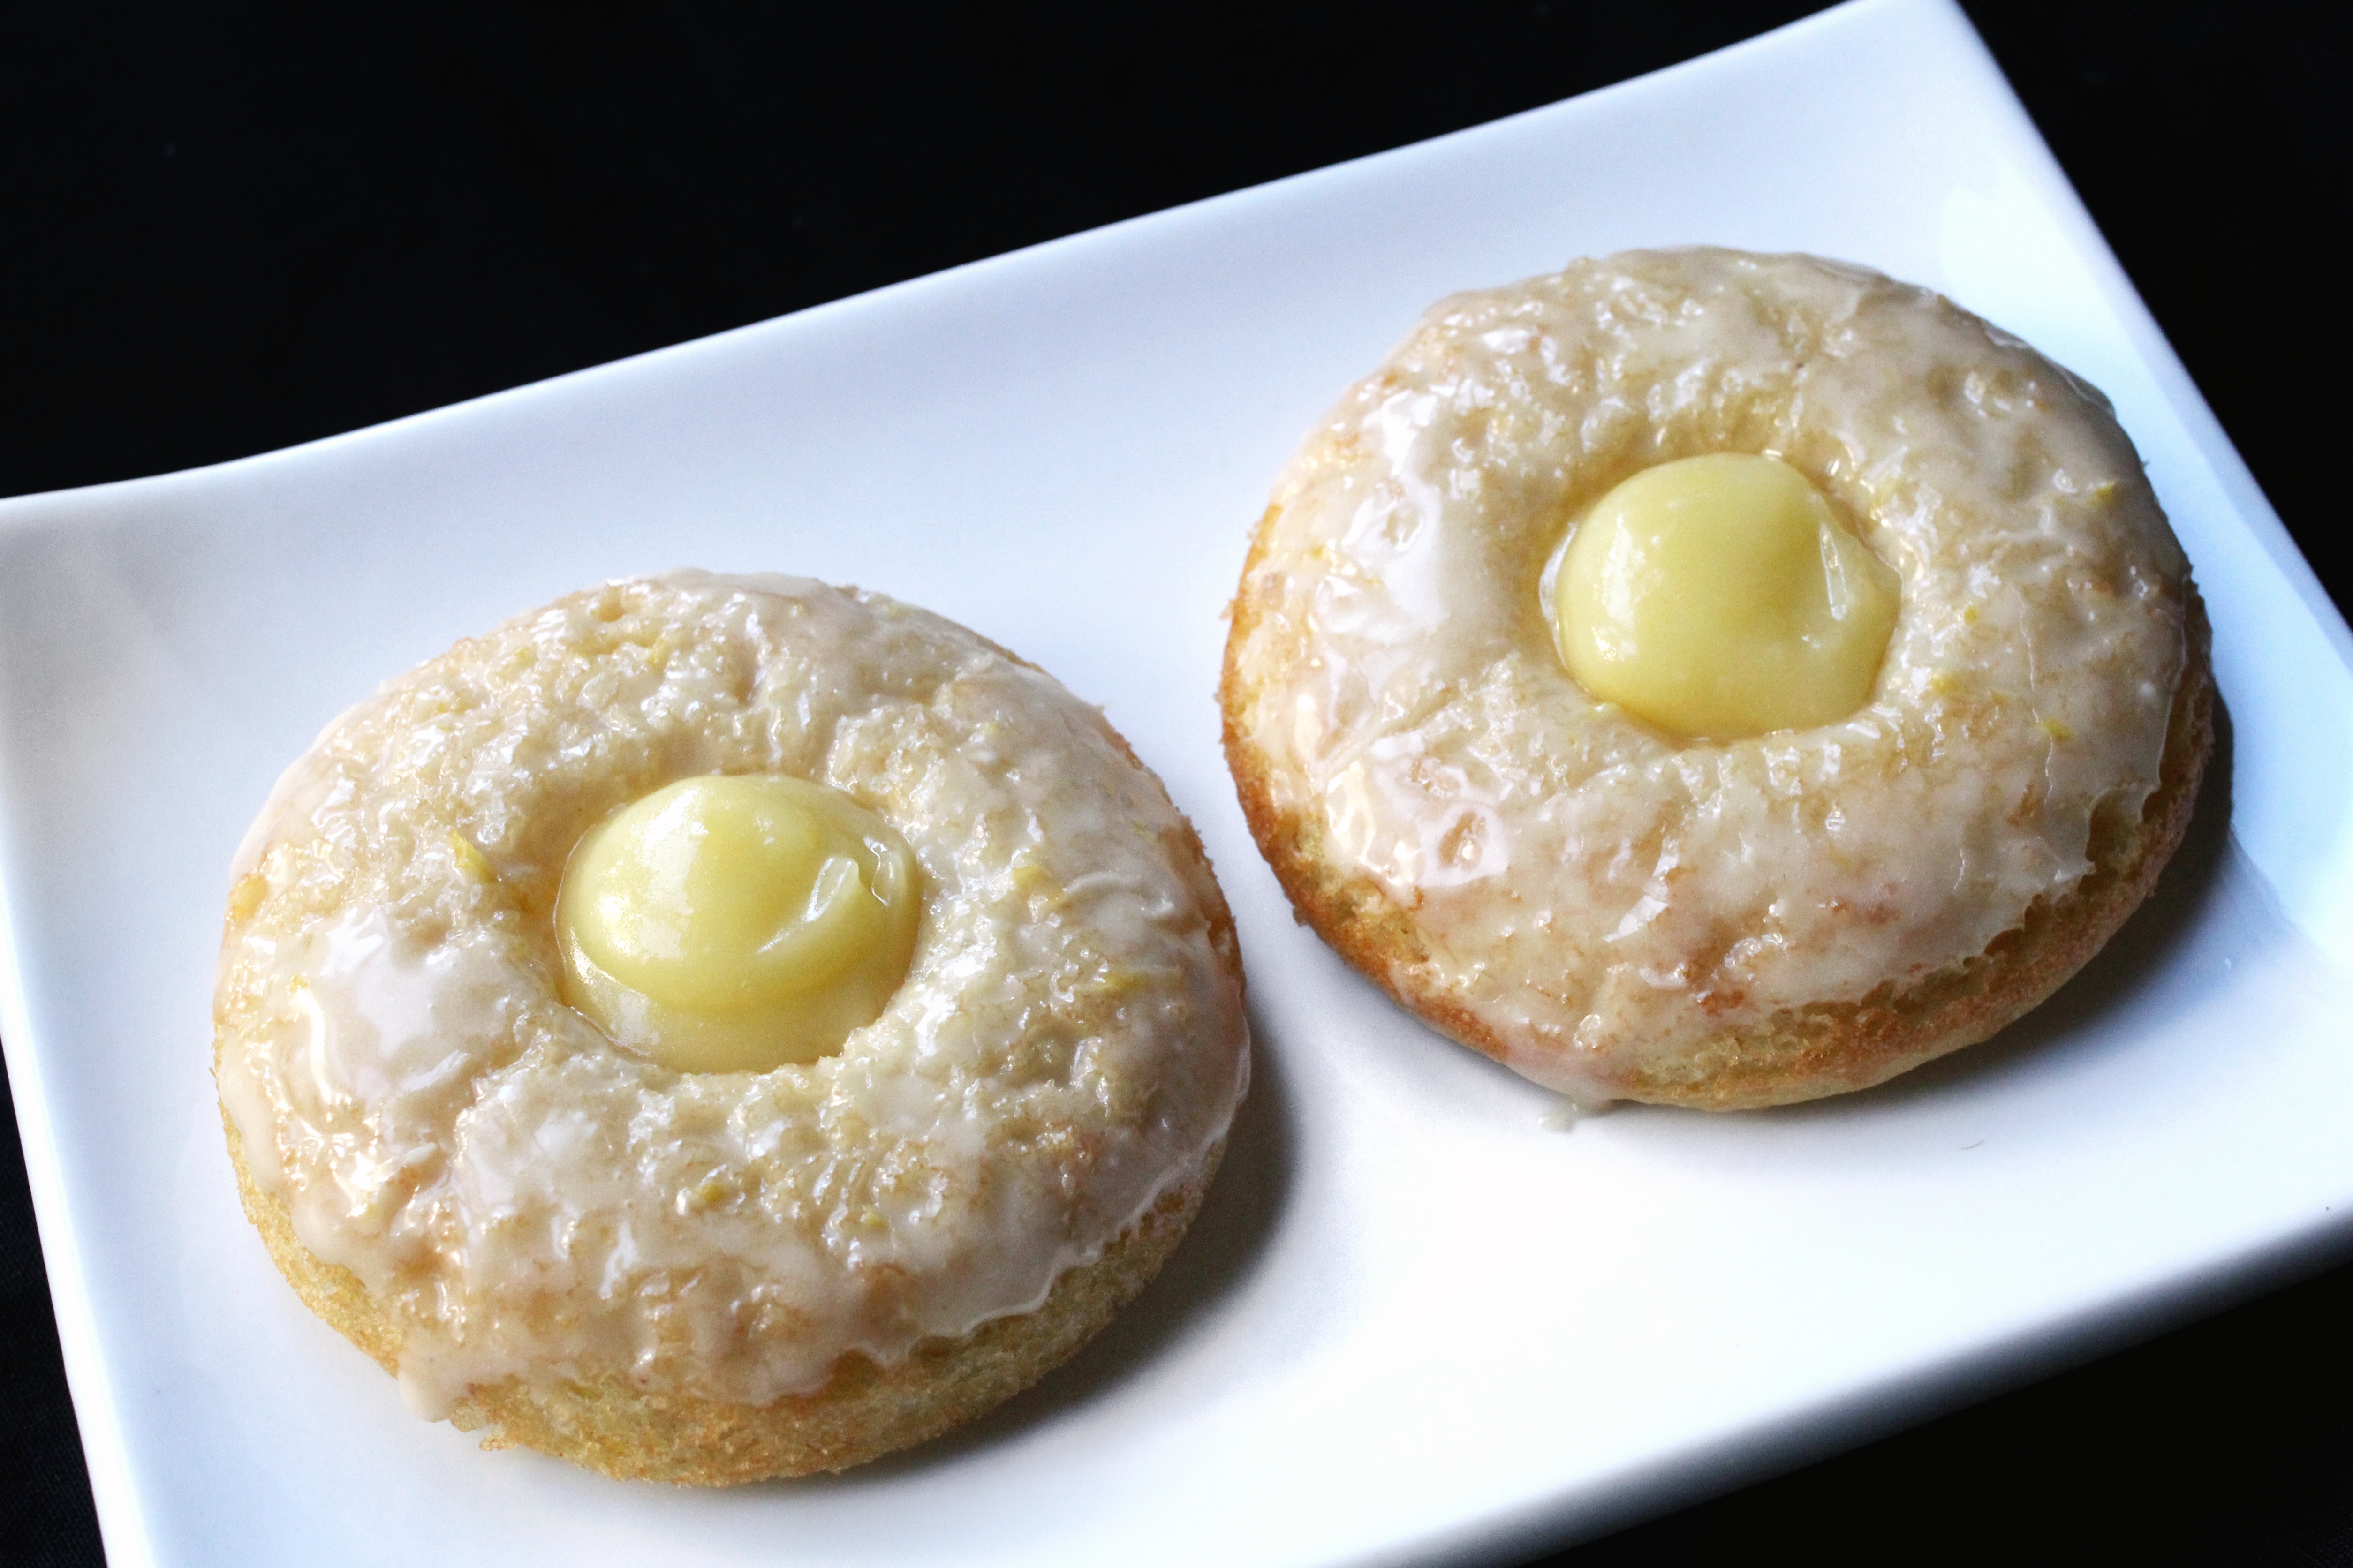 Forbidden Rice Blog | Baked Lemon Doughnuts with Homemade Lemon Curd